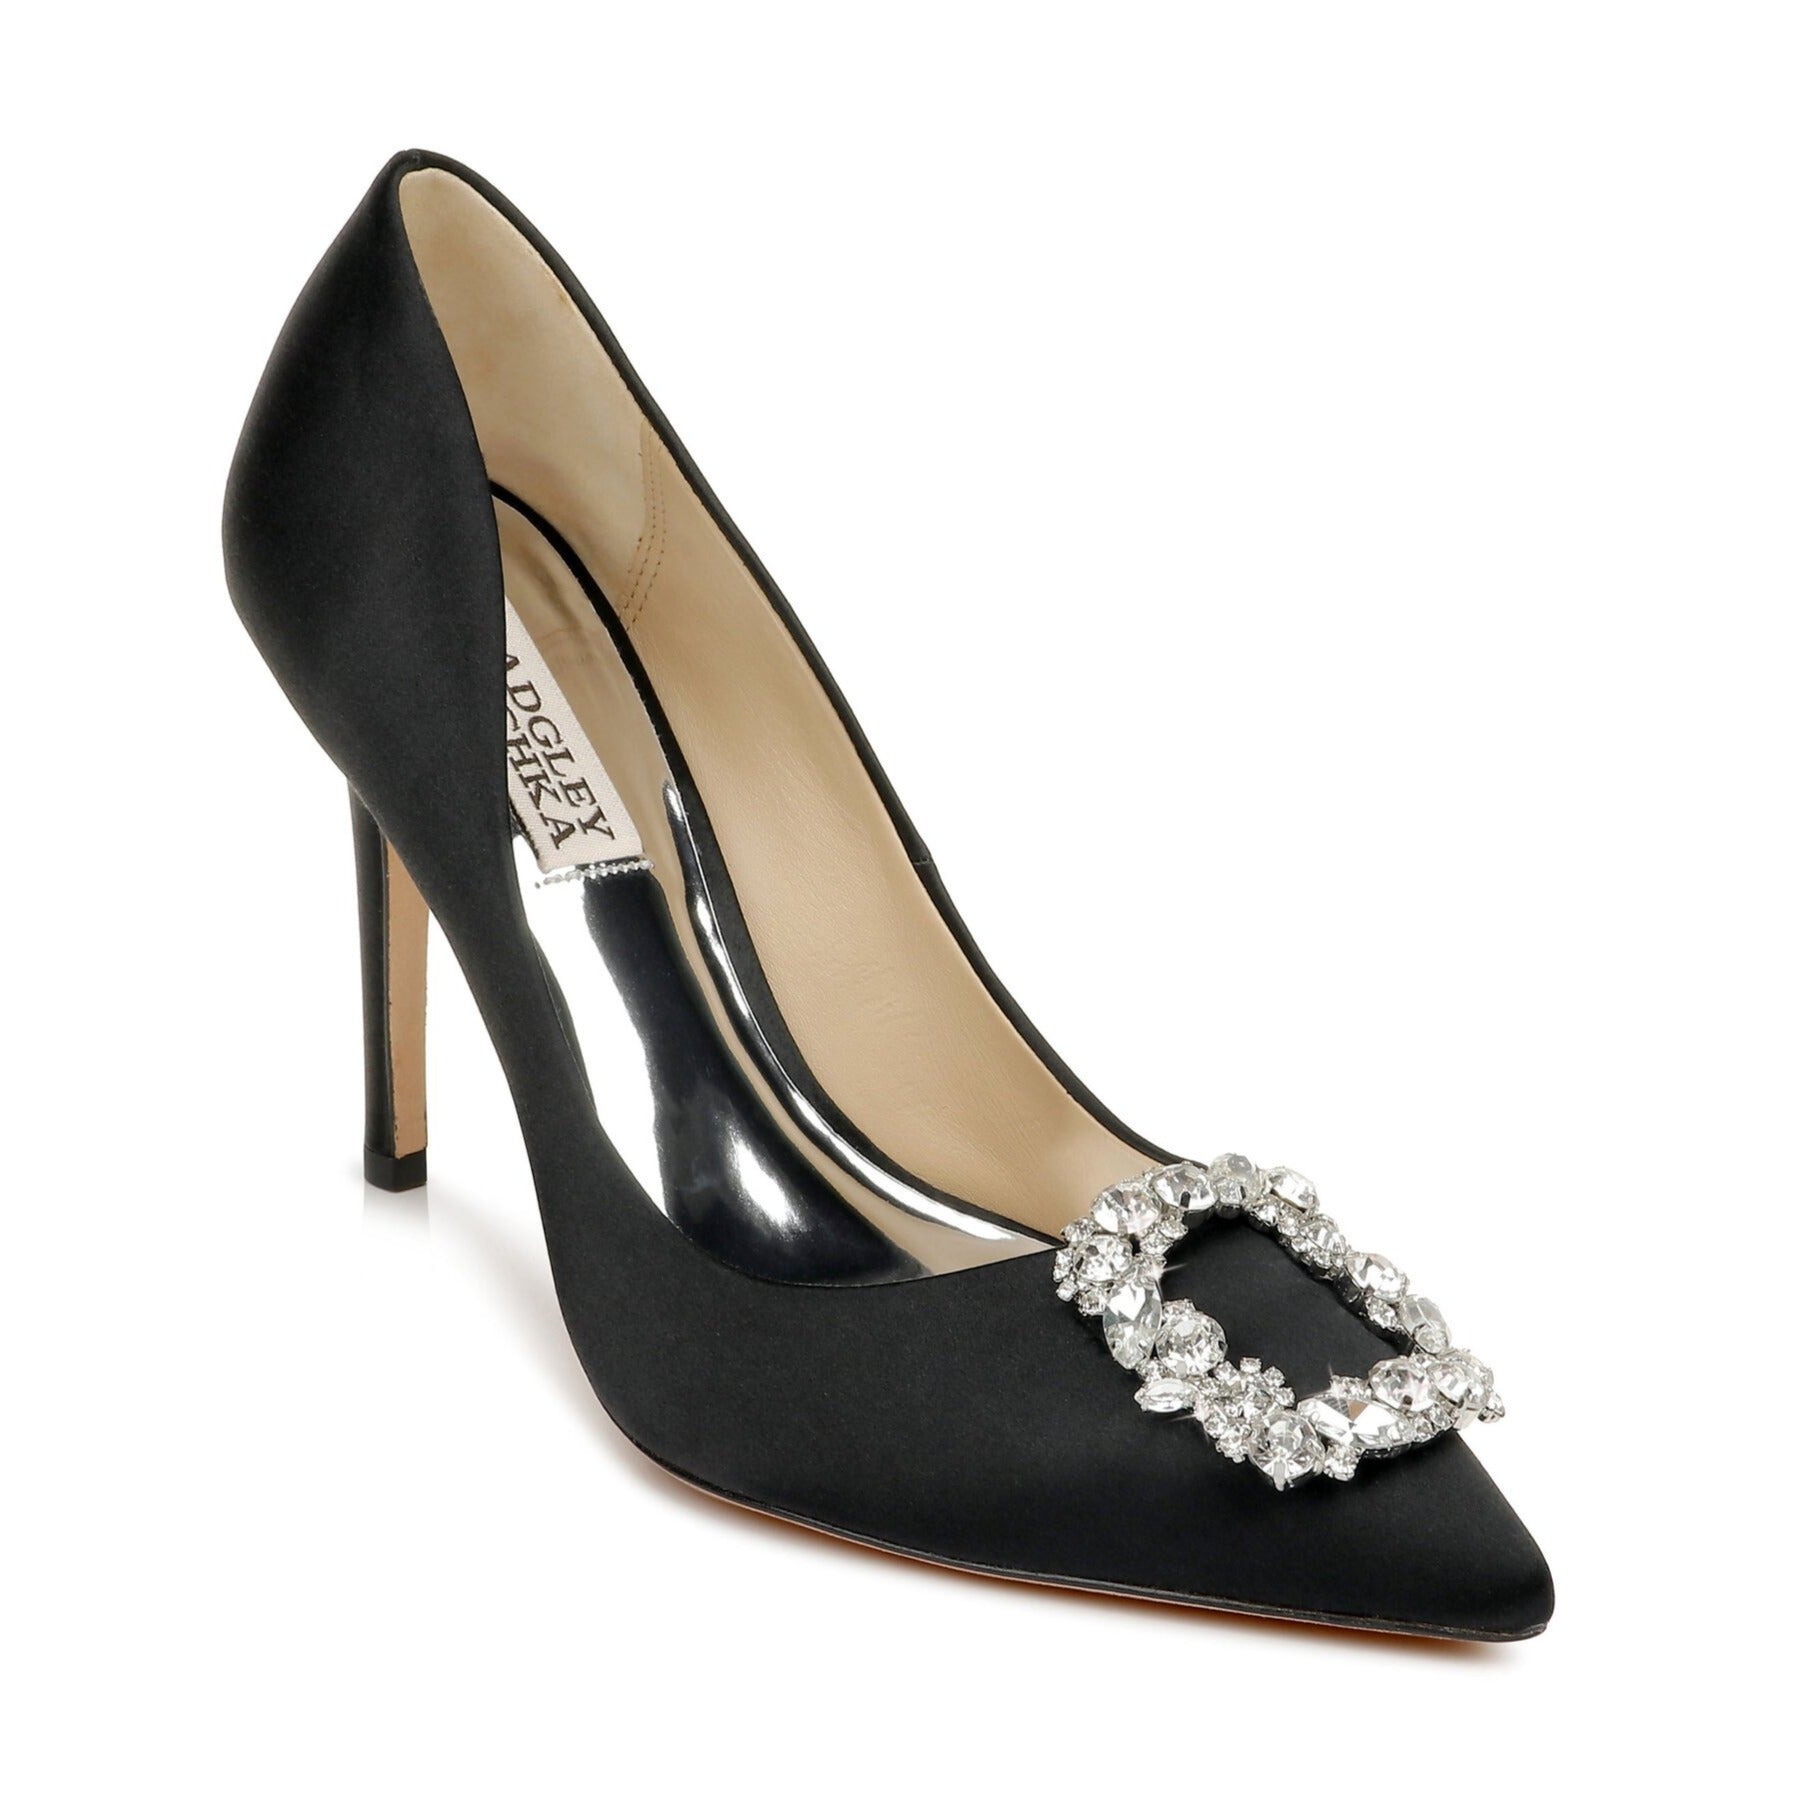 Badgley Mischka Cher Buckle Pointed Wedding Shoes - Black